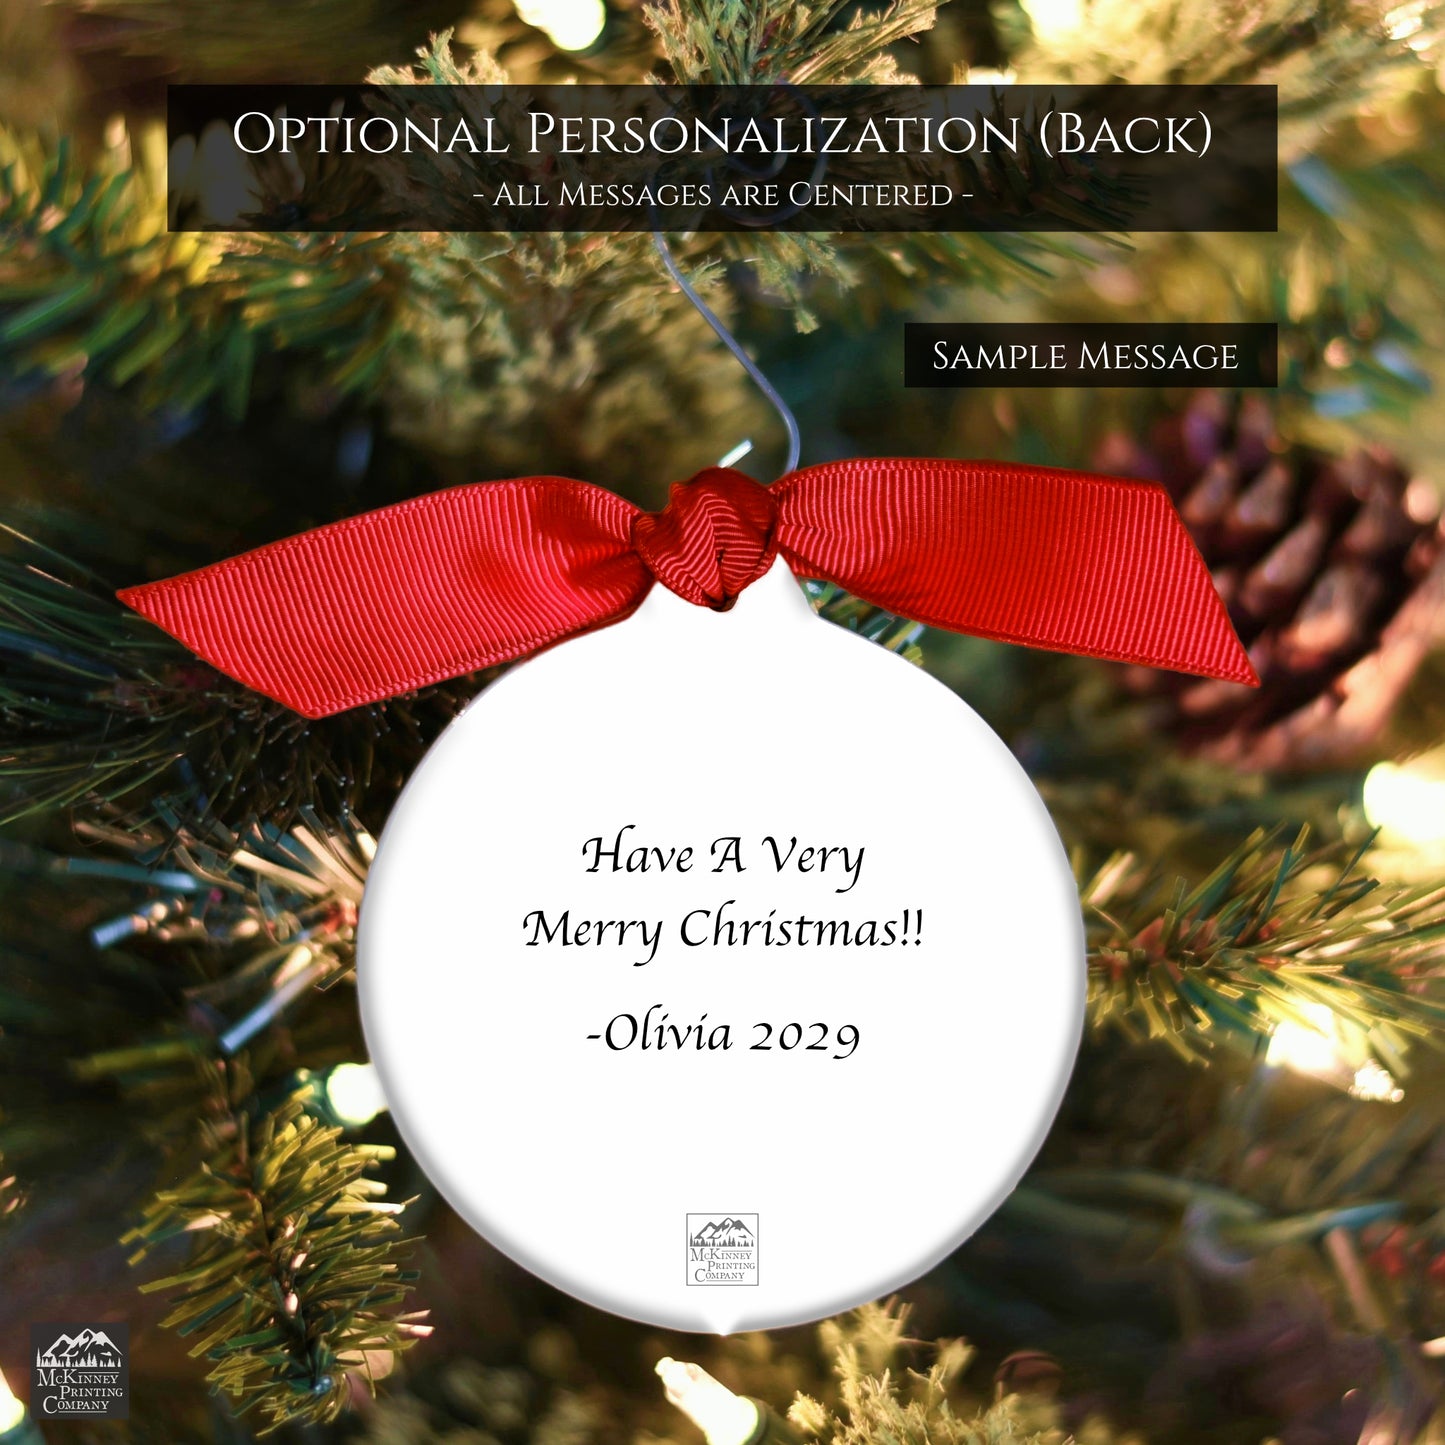 Christmas Sheet Music - Ornament, Lyrics, Hymn, The First Noel, Song